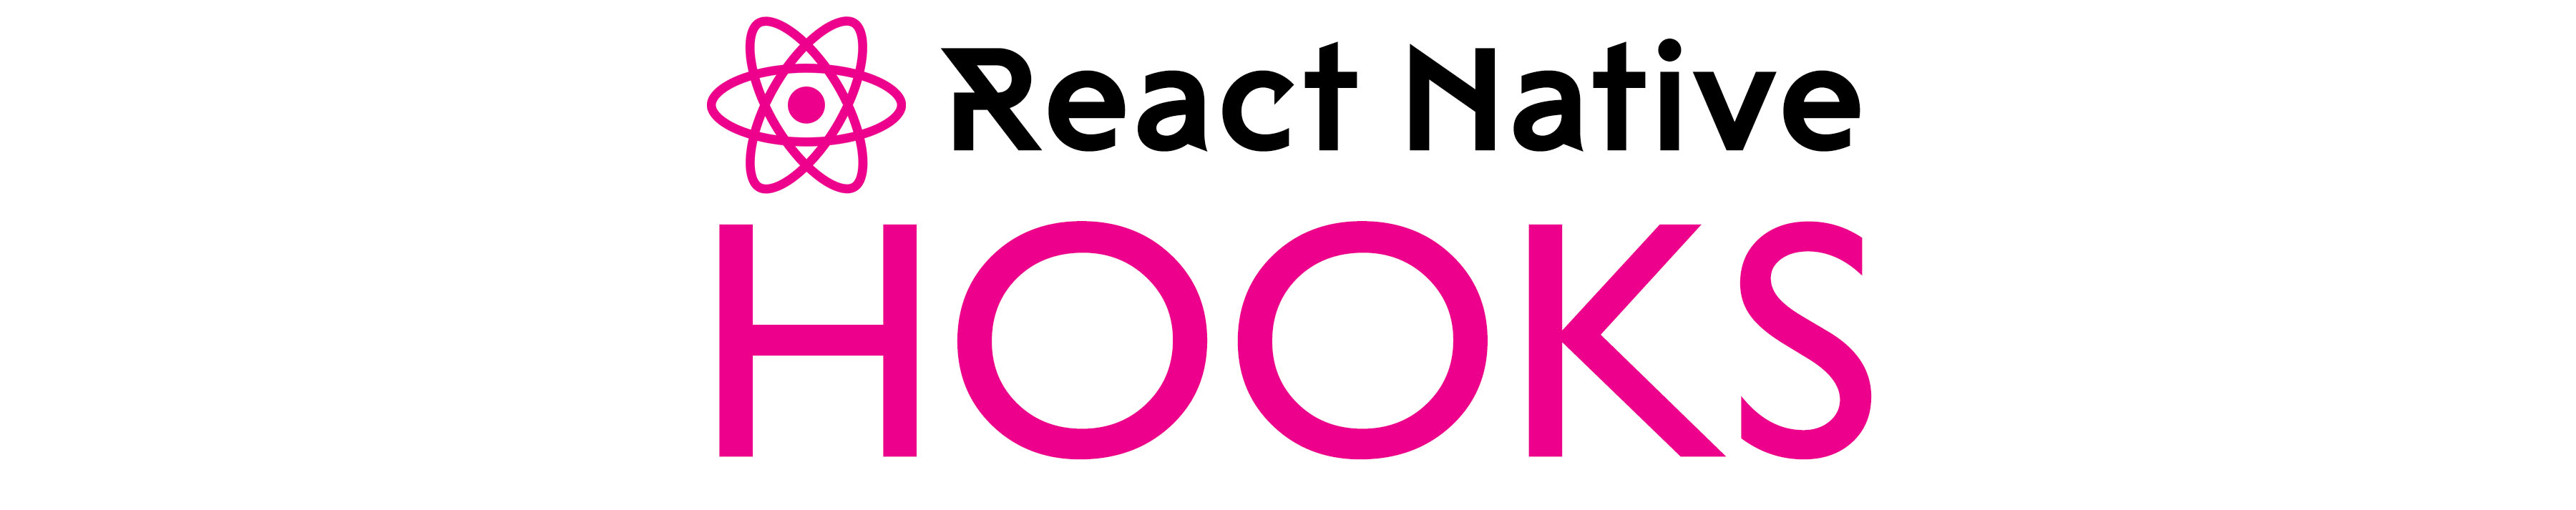 React Native Hooks